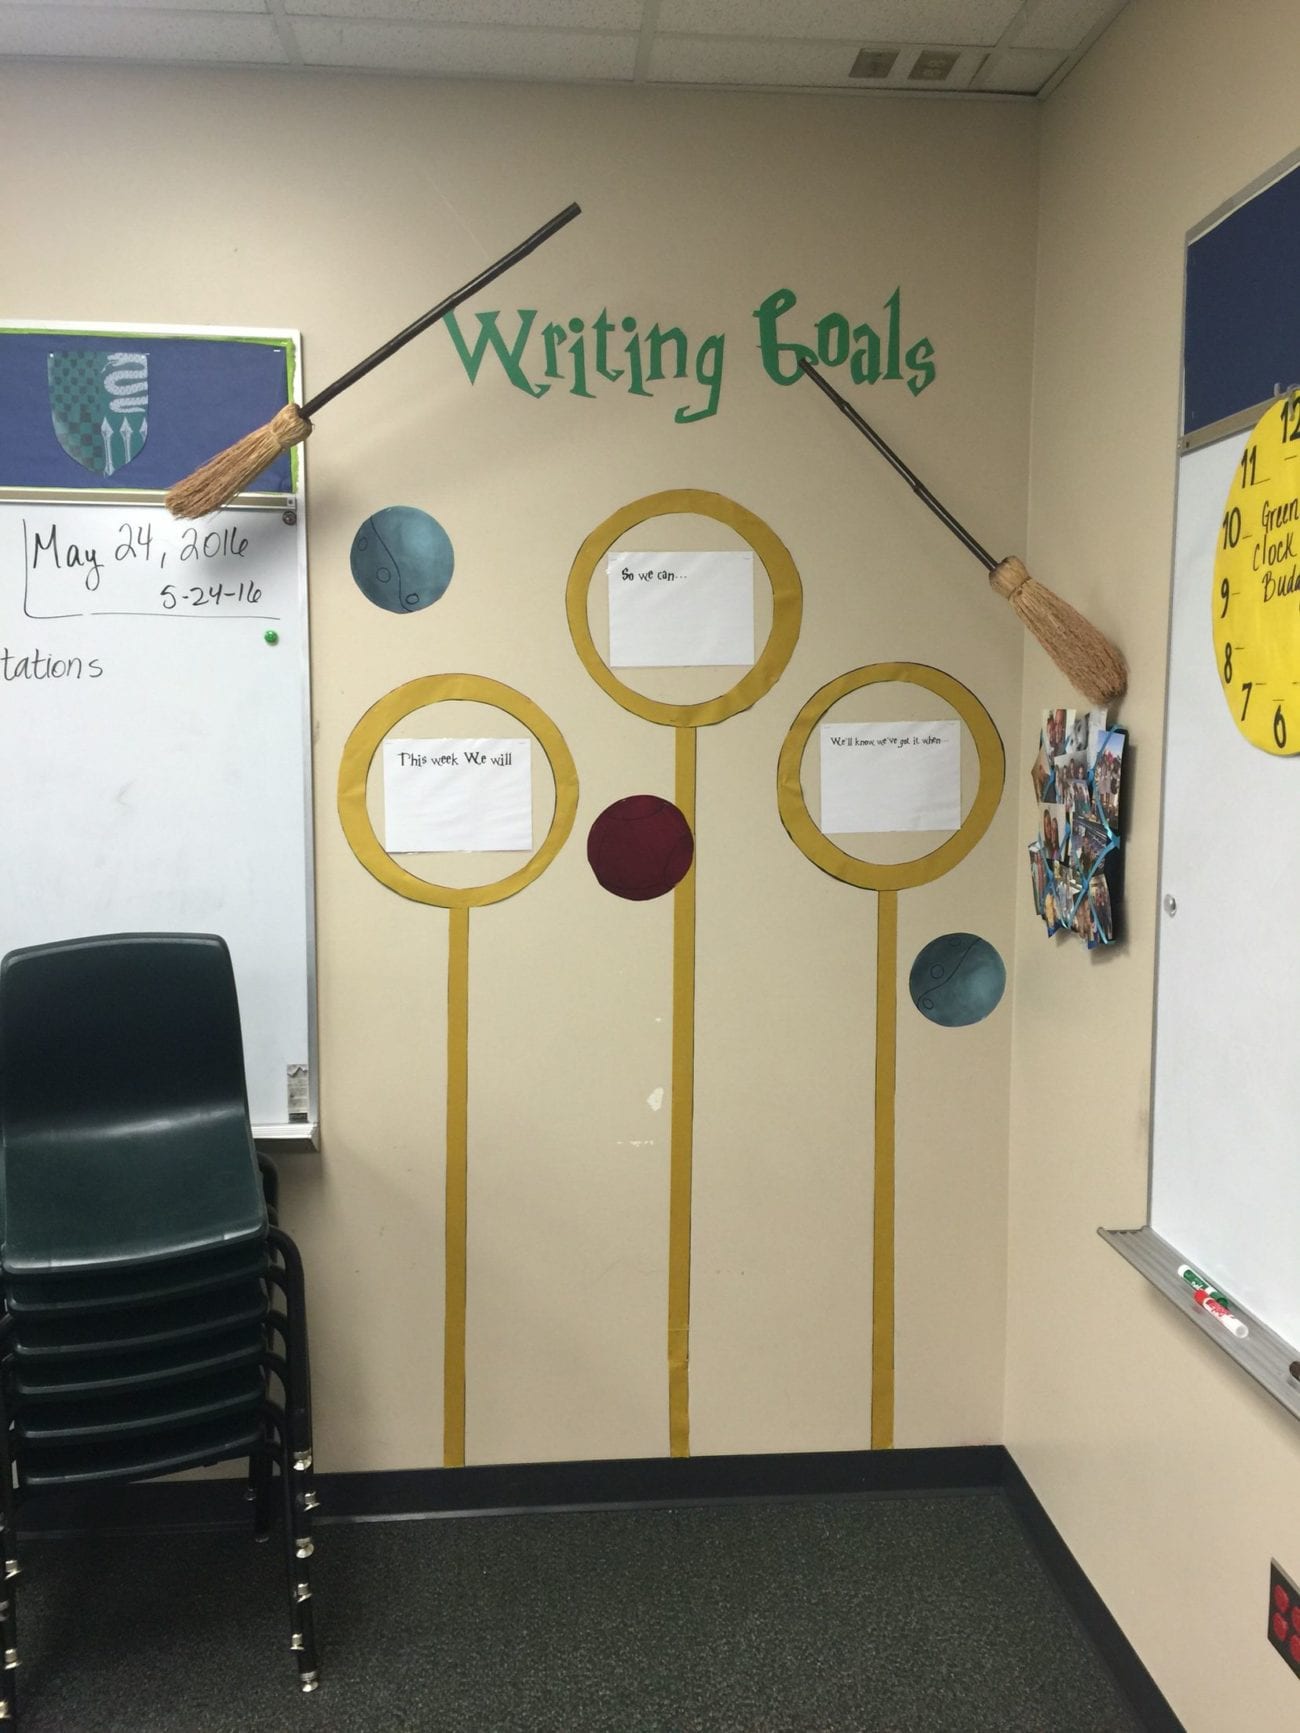 Writing goals with Quidditch goals